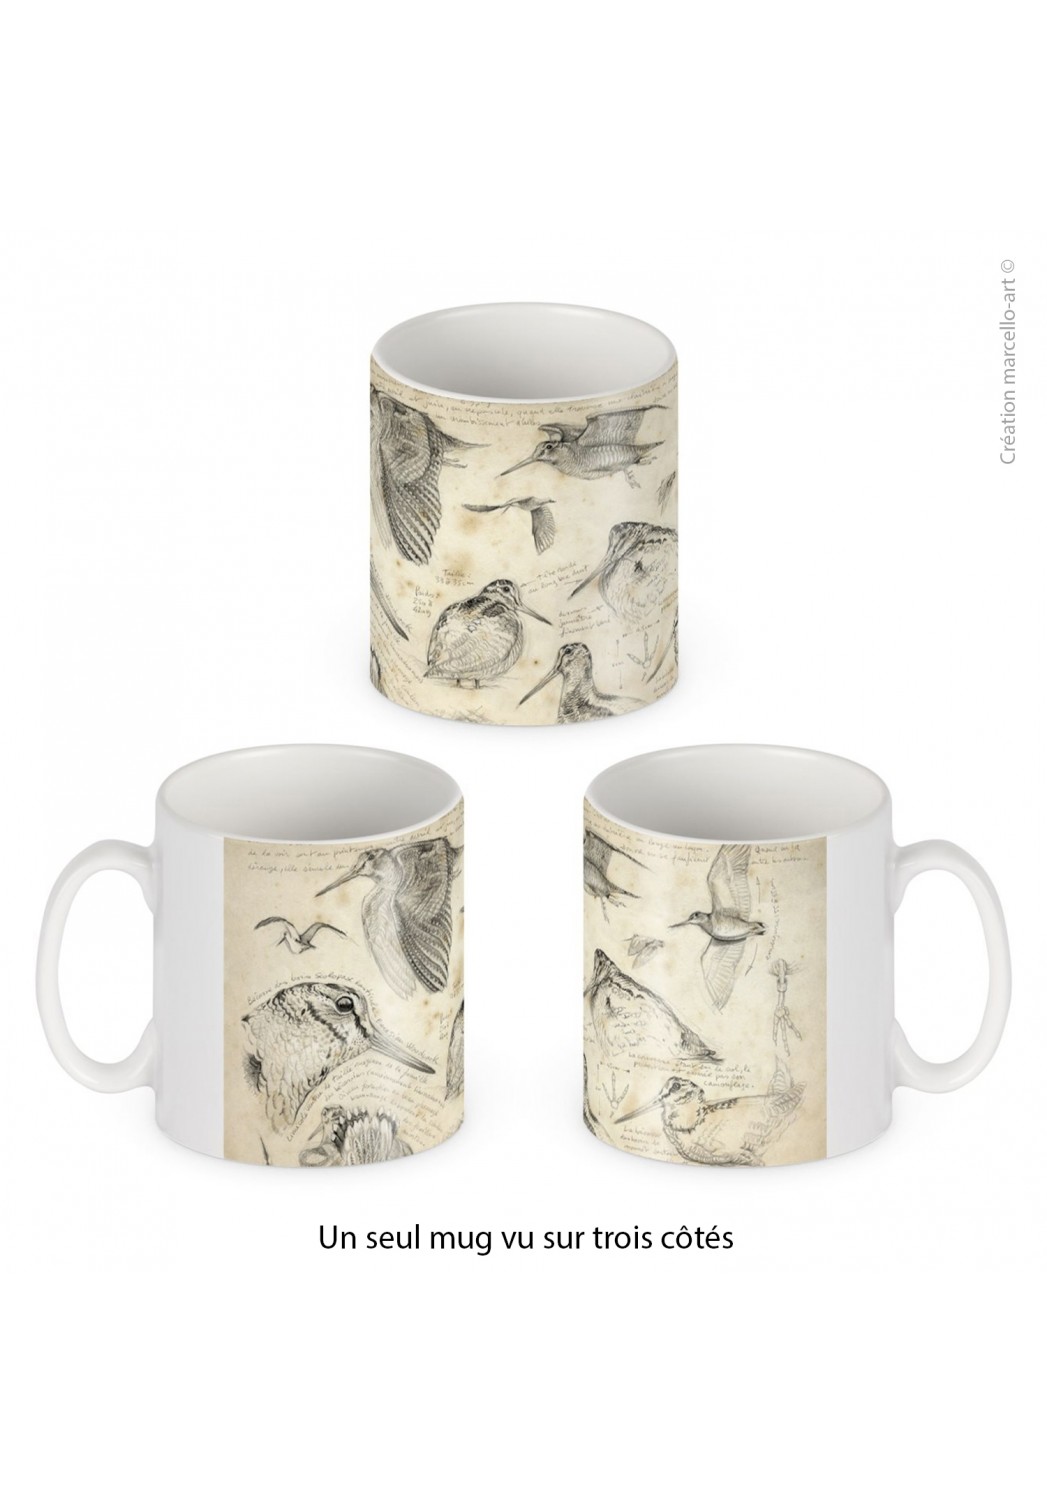 Marcello-art: Decoration accessoiries Porcelain mug 50 snipe